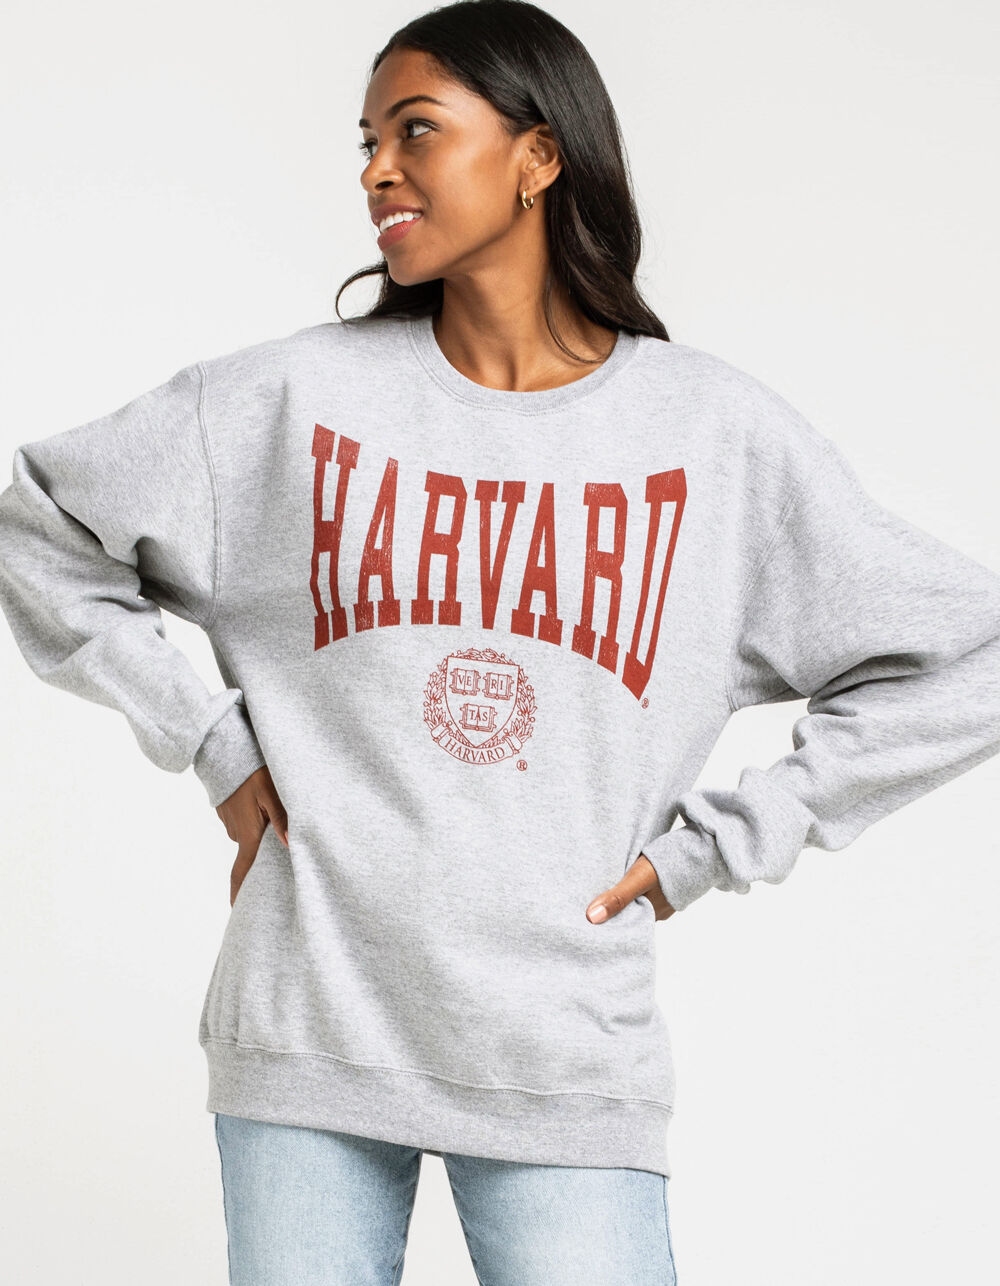 HARVARD Womens Crew Sweatshirt - HEATHER GRAY